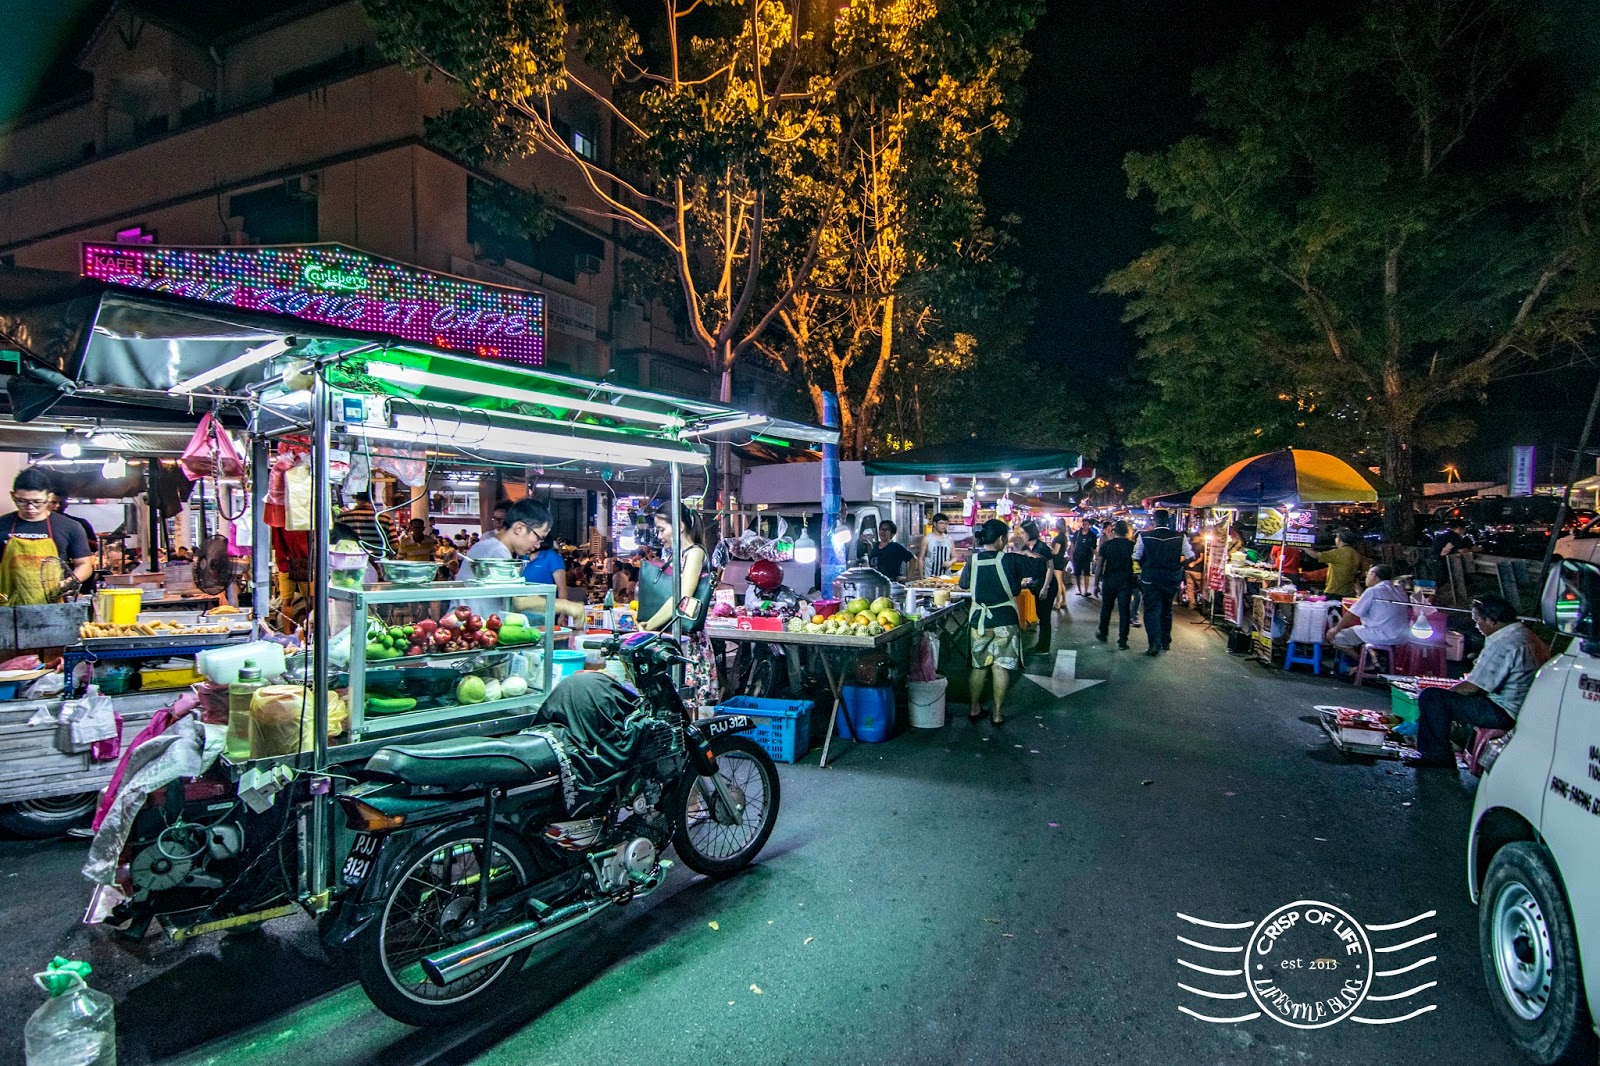 Paya Terubong Night Market on Every Sunday, Penang